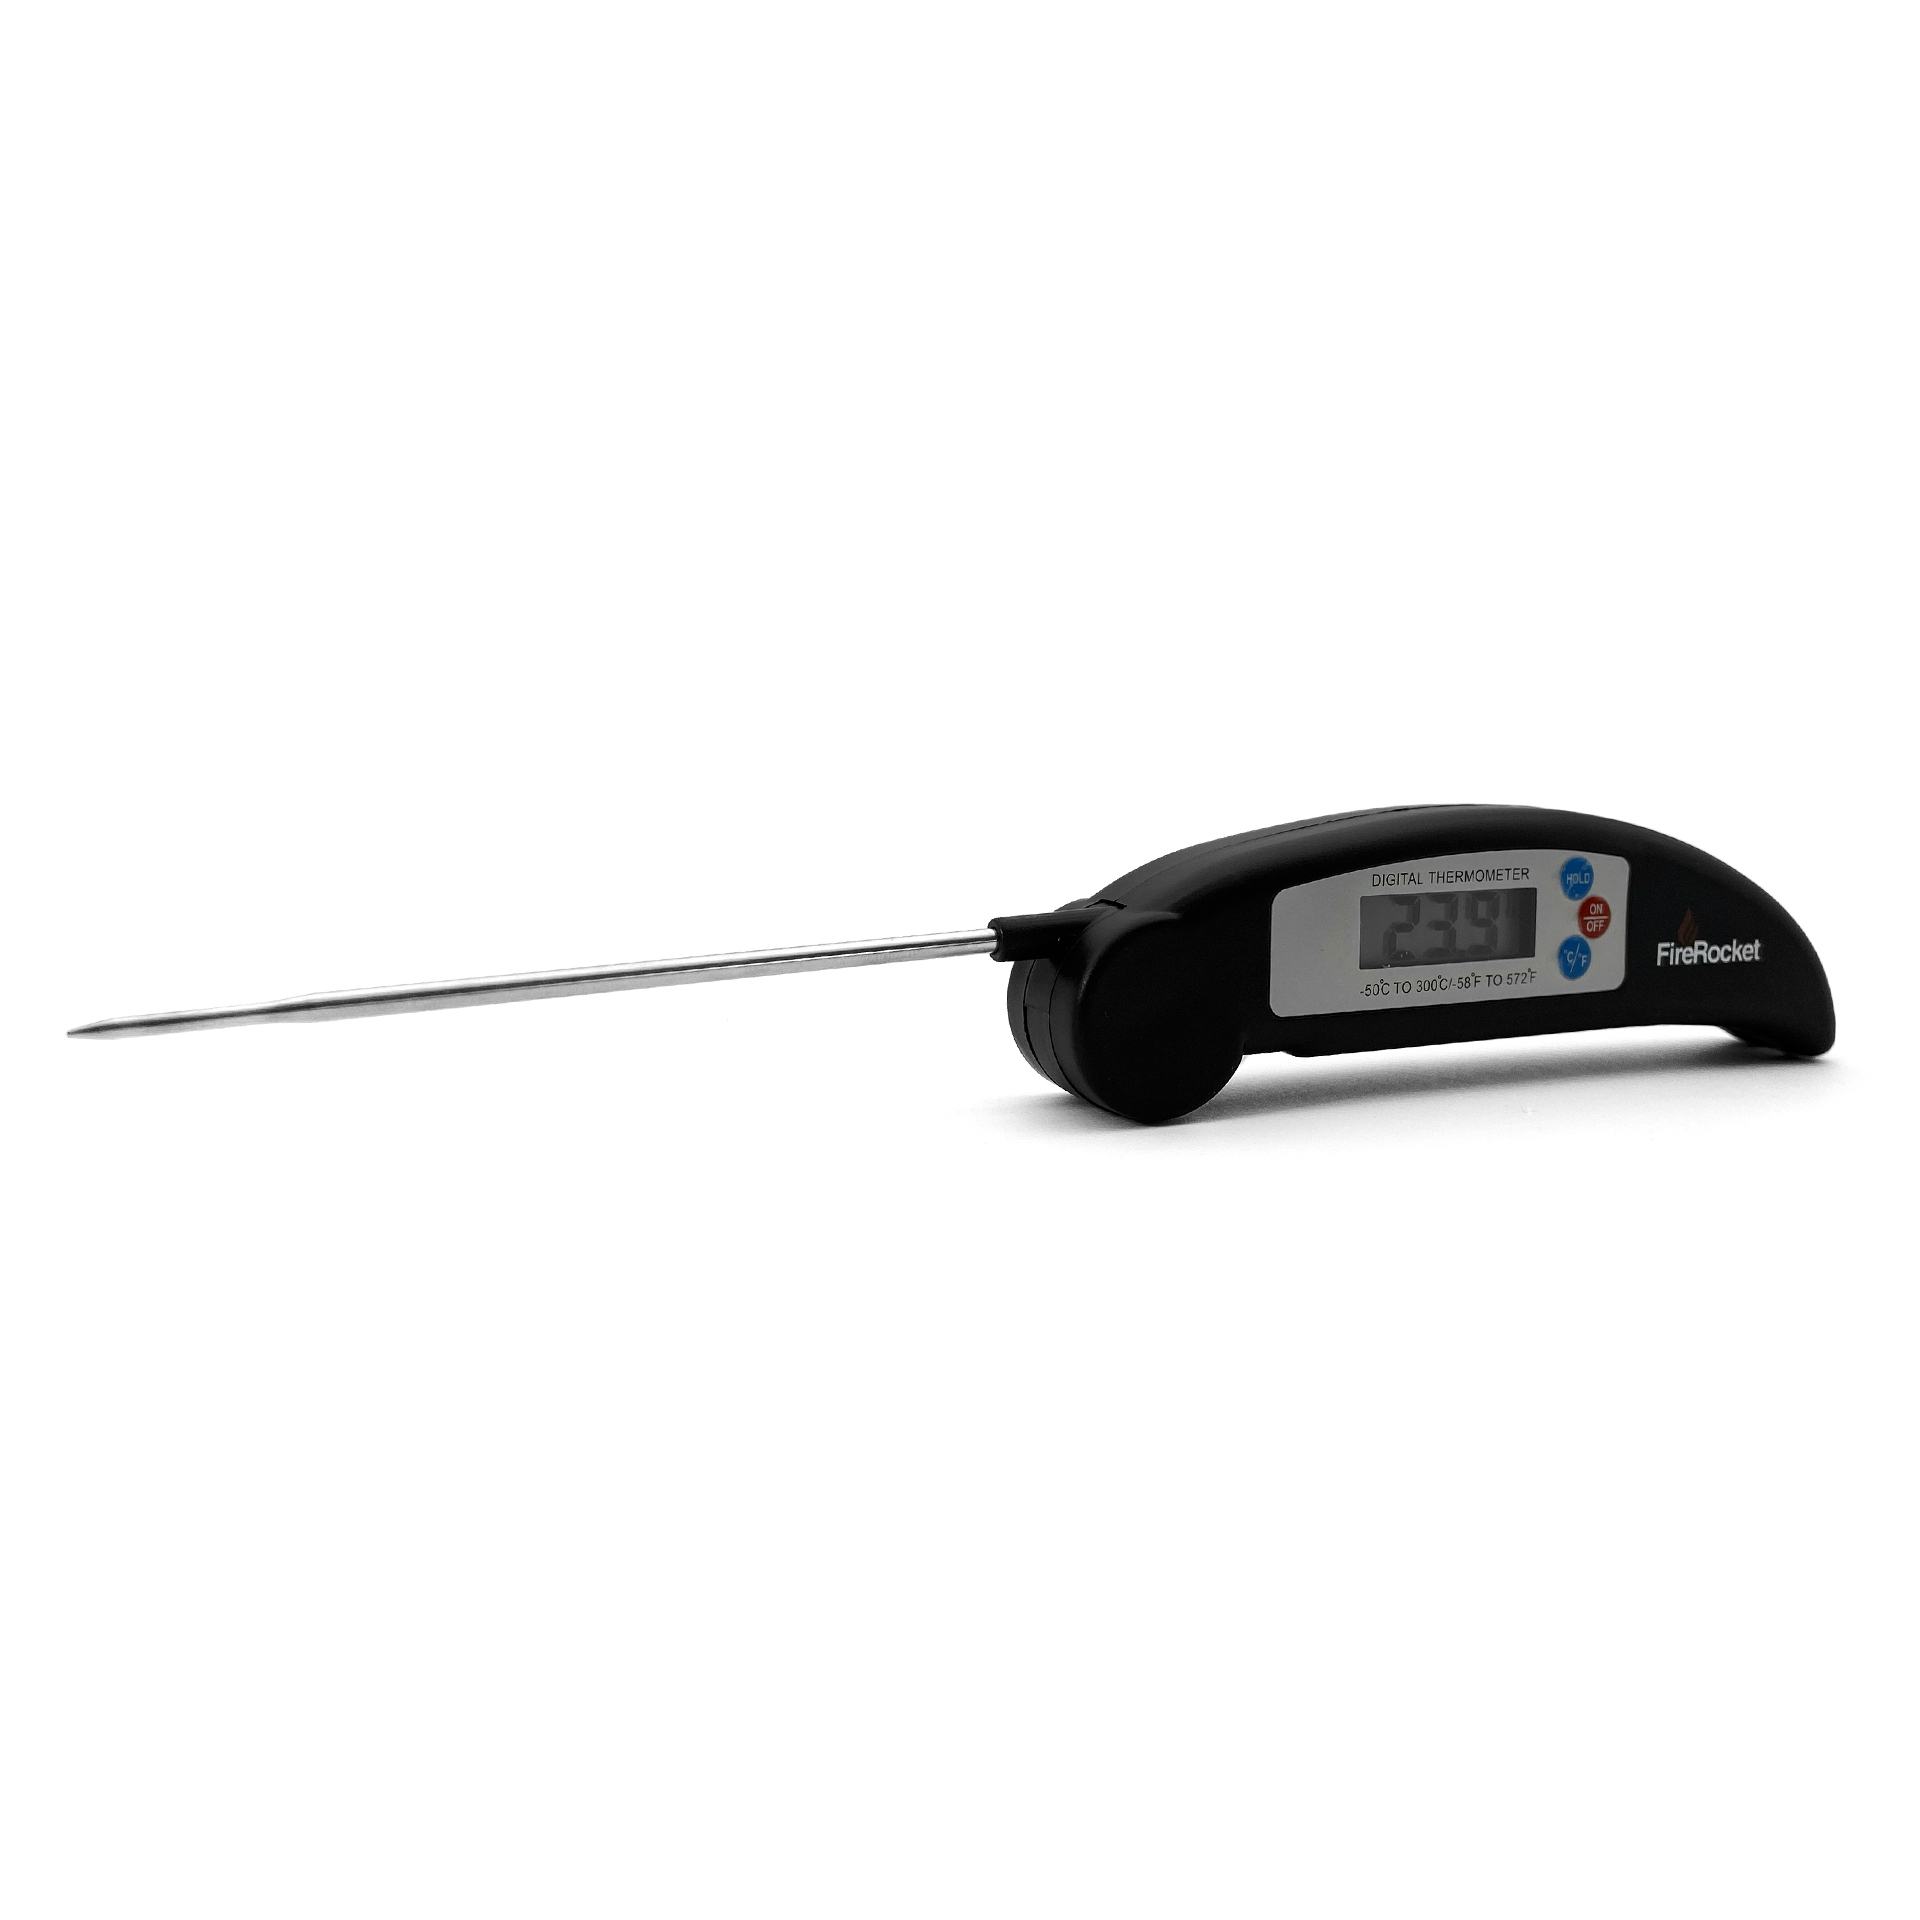 FireRocket BBQ Thermometer klappbar digitales Grillthermometer